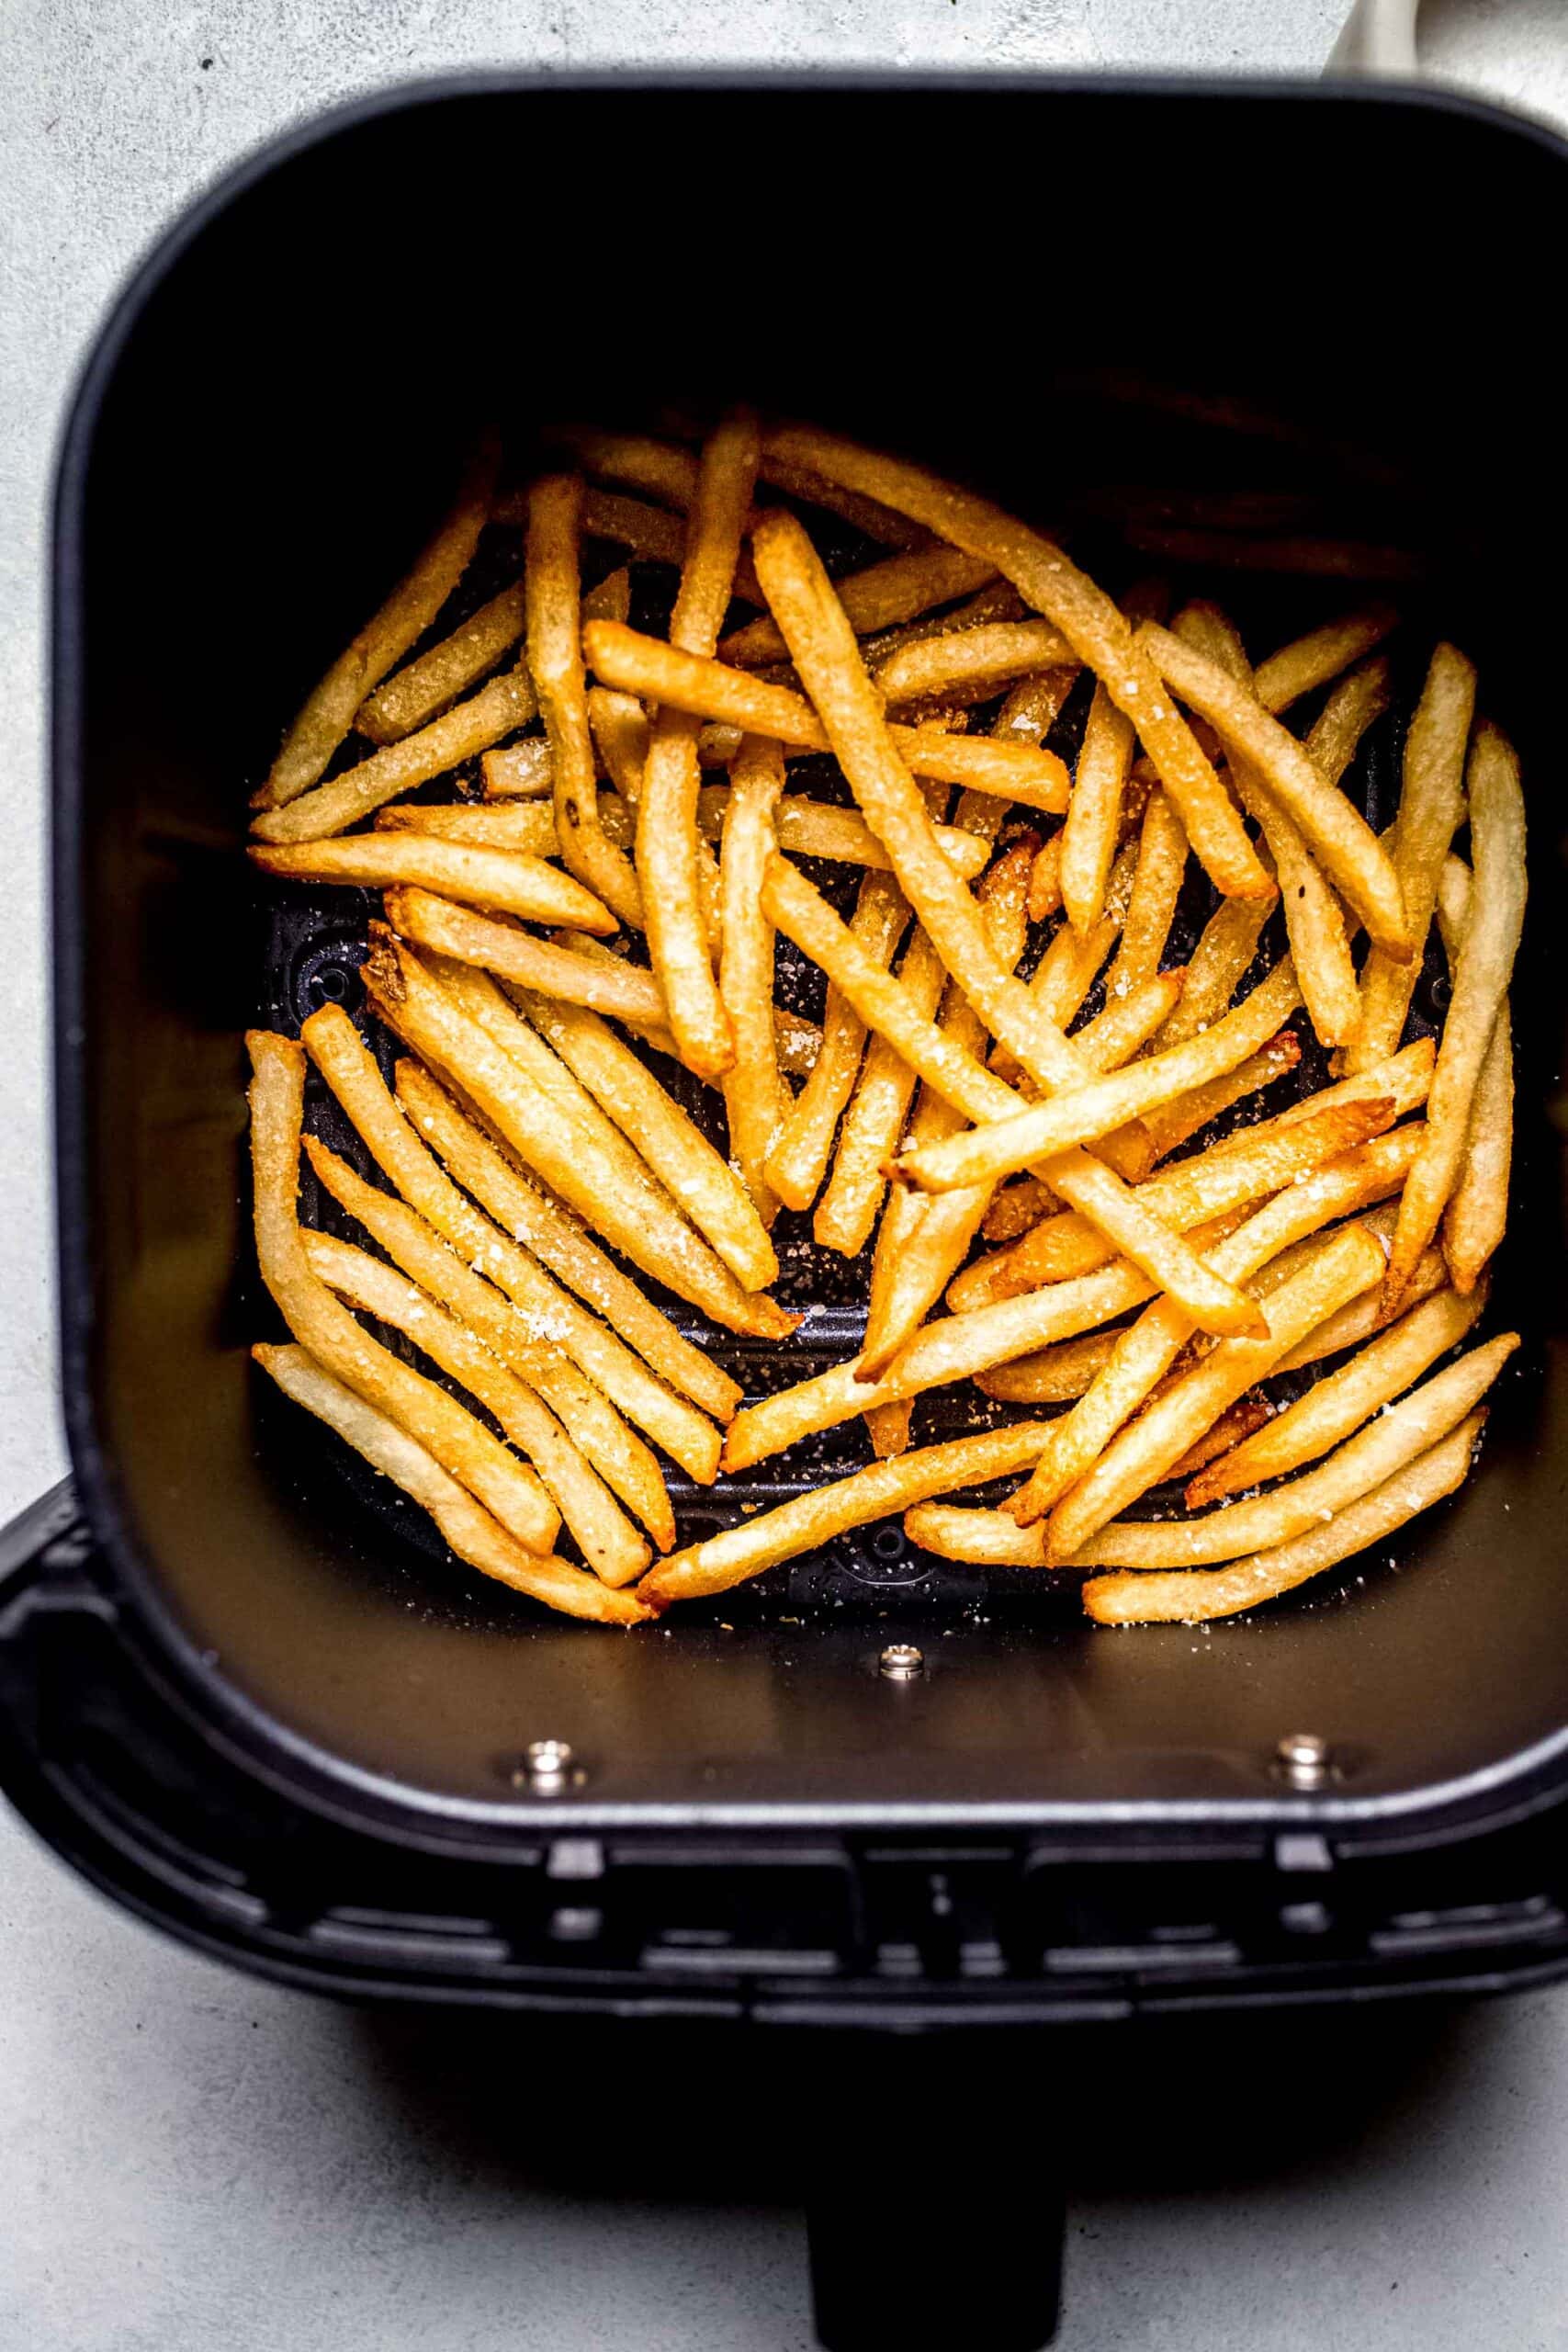 Cooked fries in air fryer basket.